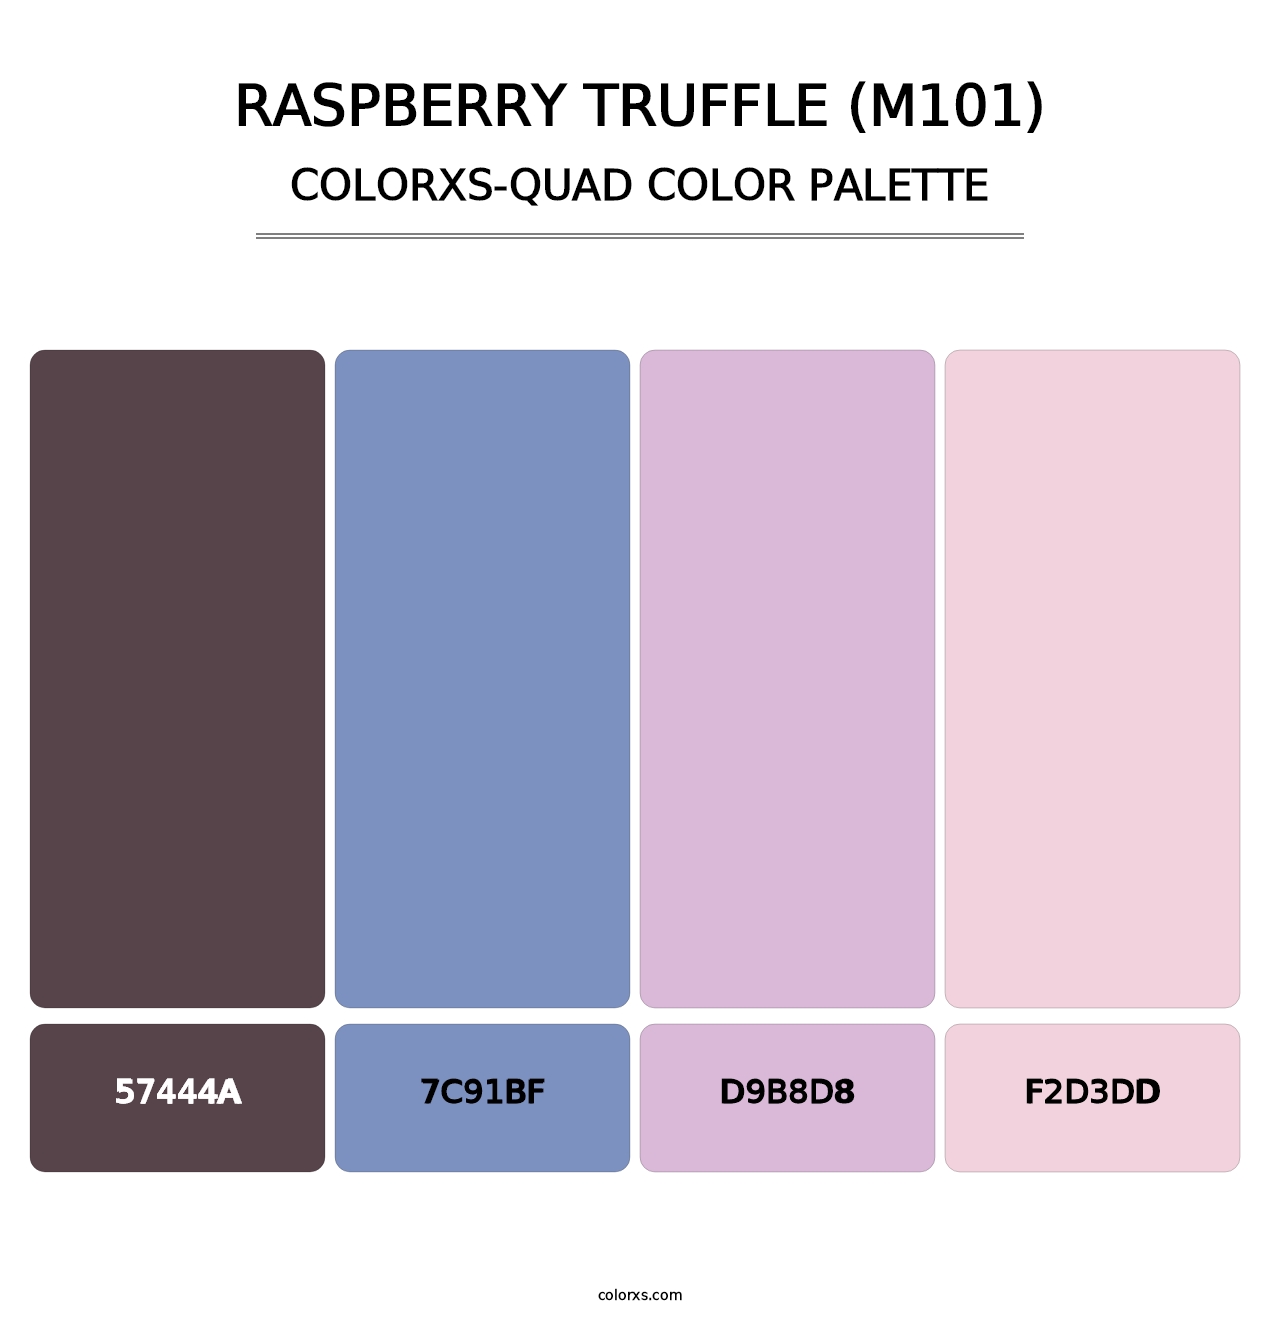 Raspberry Truffle (M101) - Colorxs Quad Palette